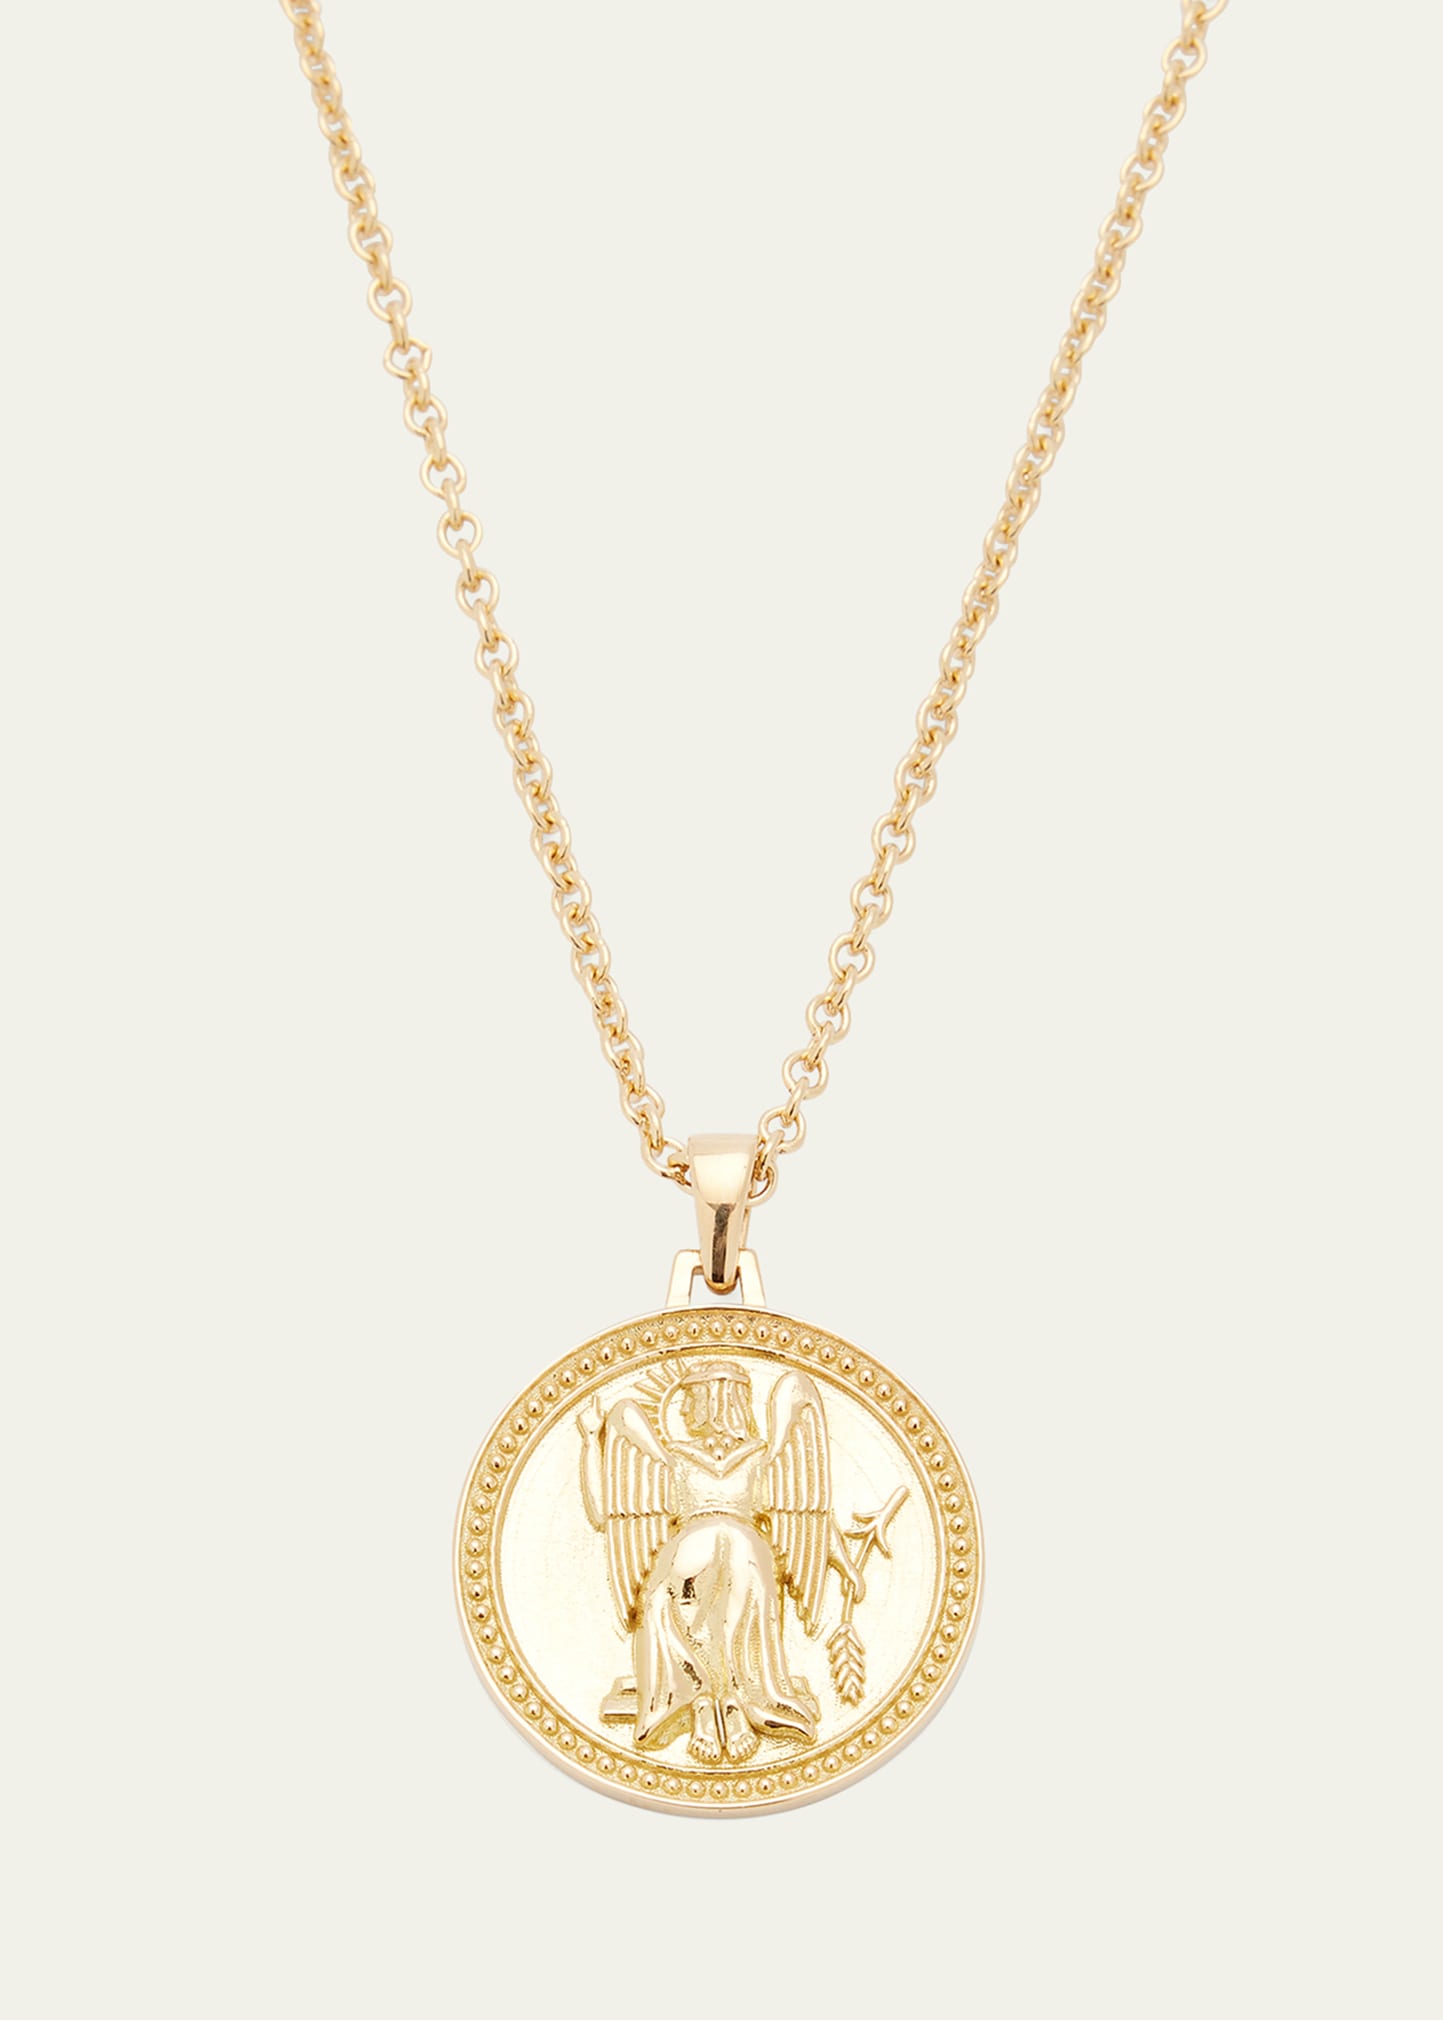 Futura Jewelry Fairmined Gold Virgo Necklace